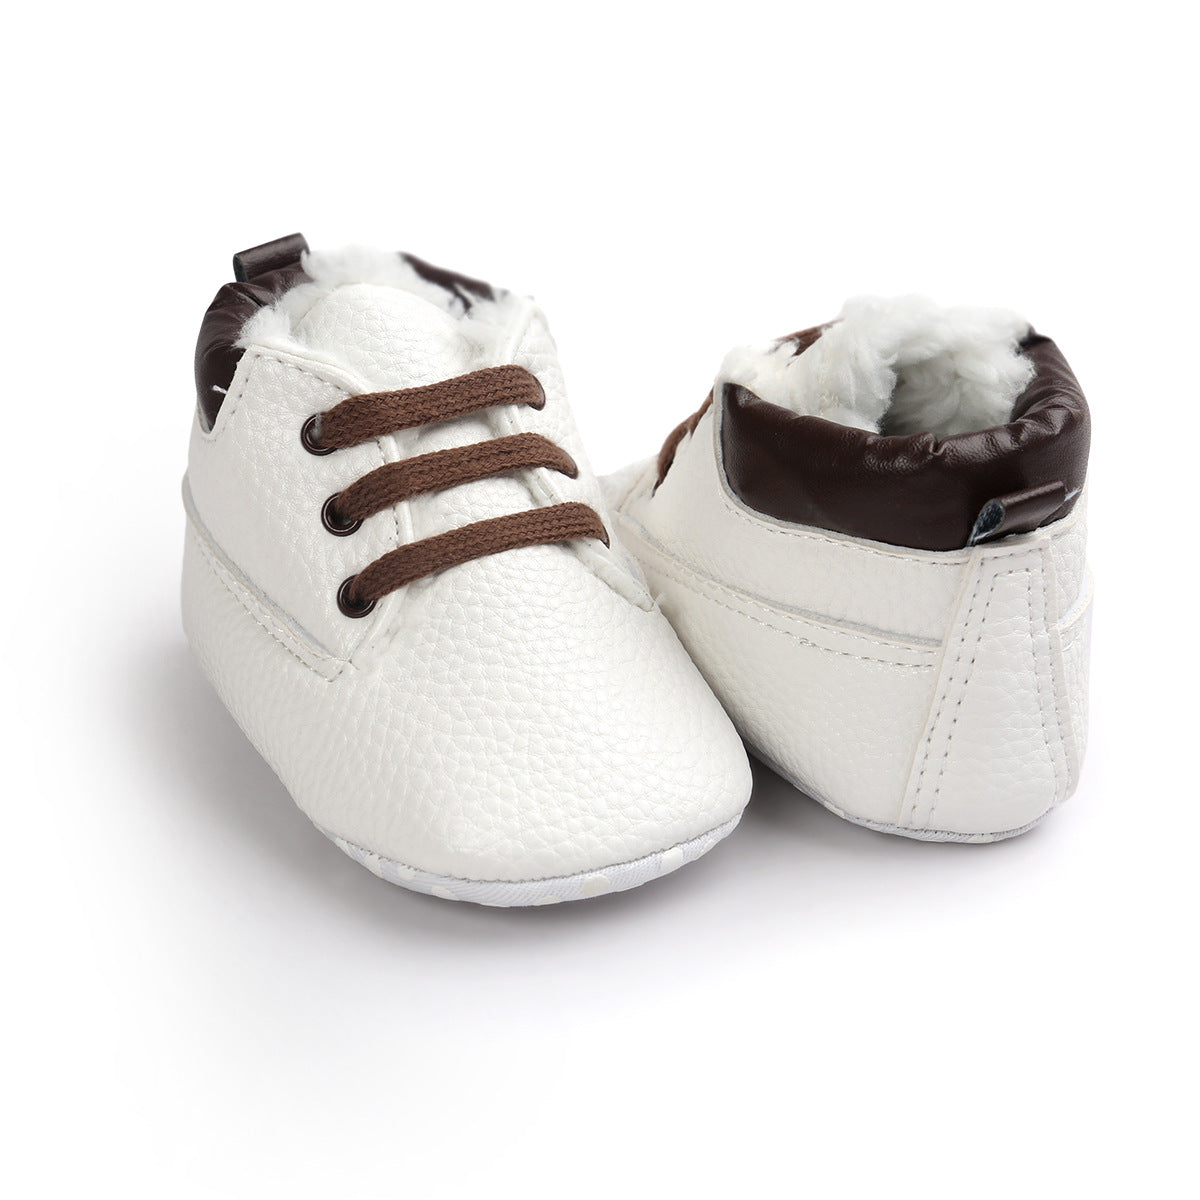 Toddler Winter Leather Sneaker White-13cm